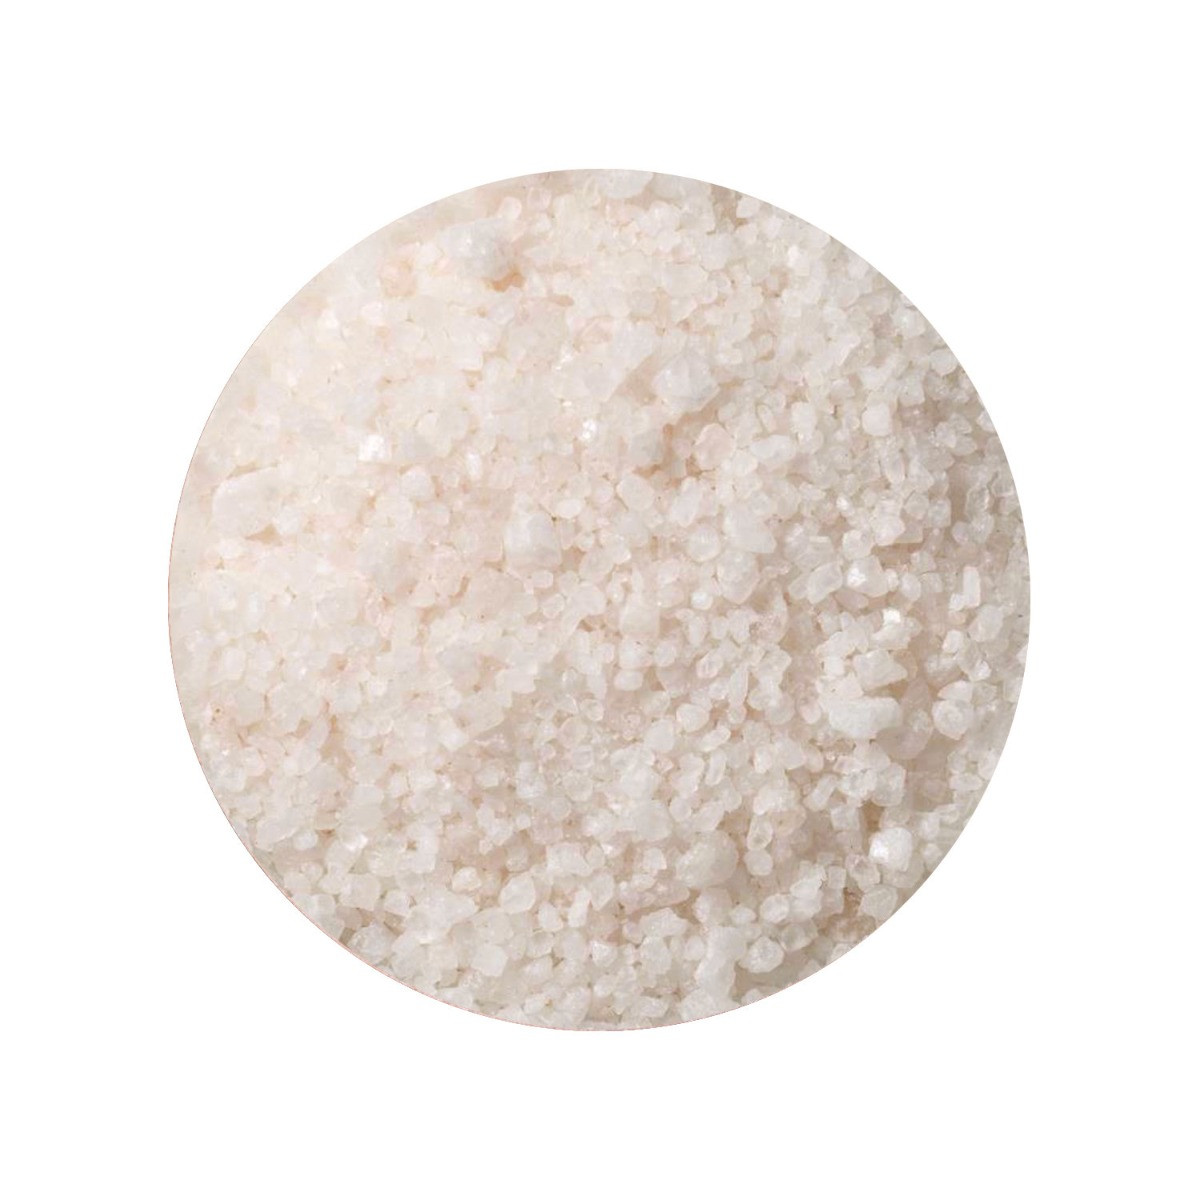 Dode Zeezout Granulaat 2.0- 4.0 mm 1 kg